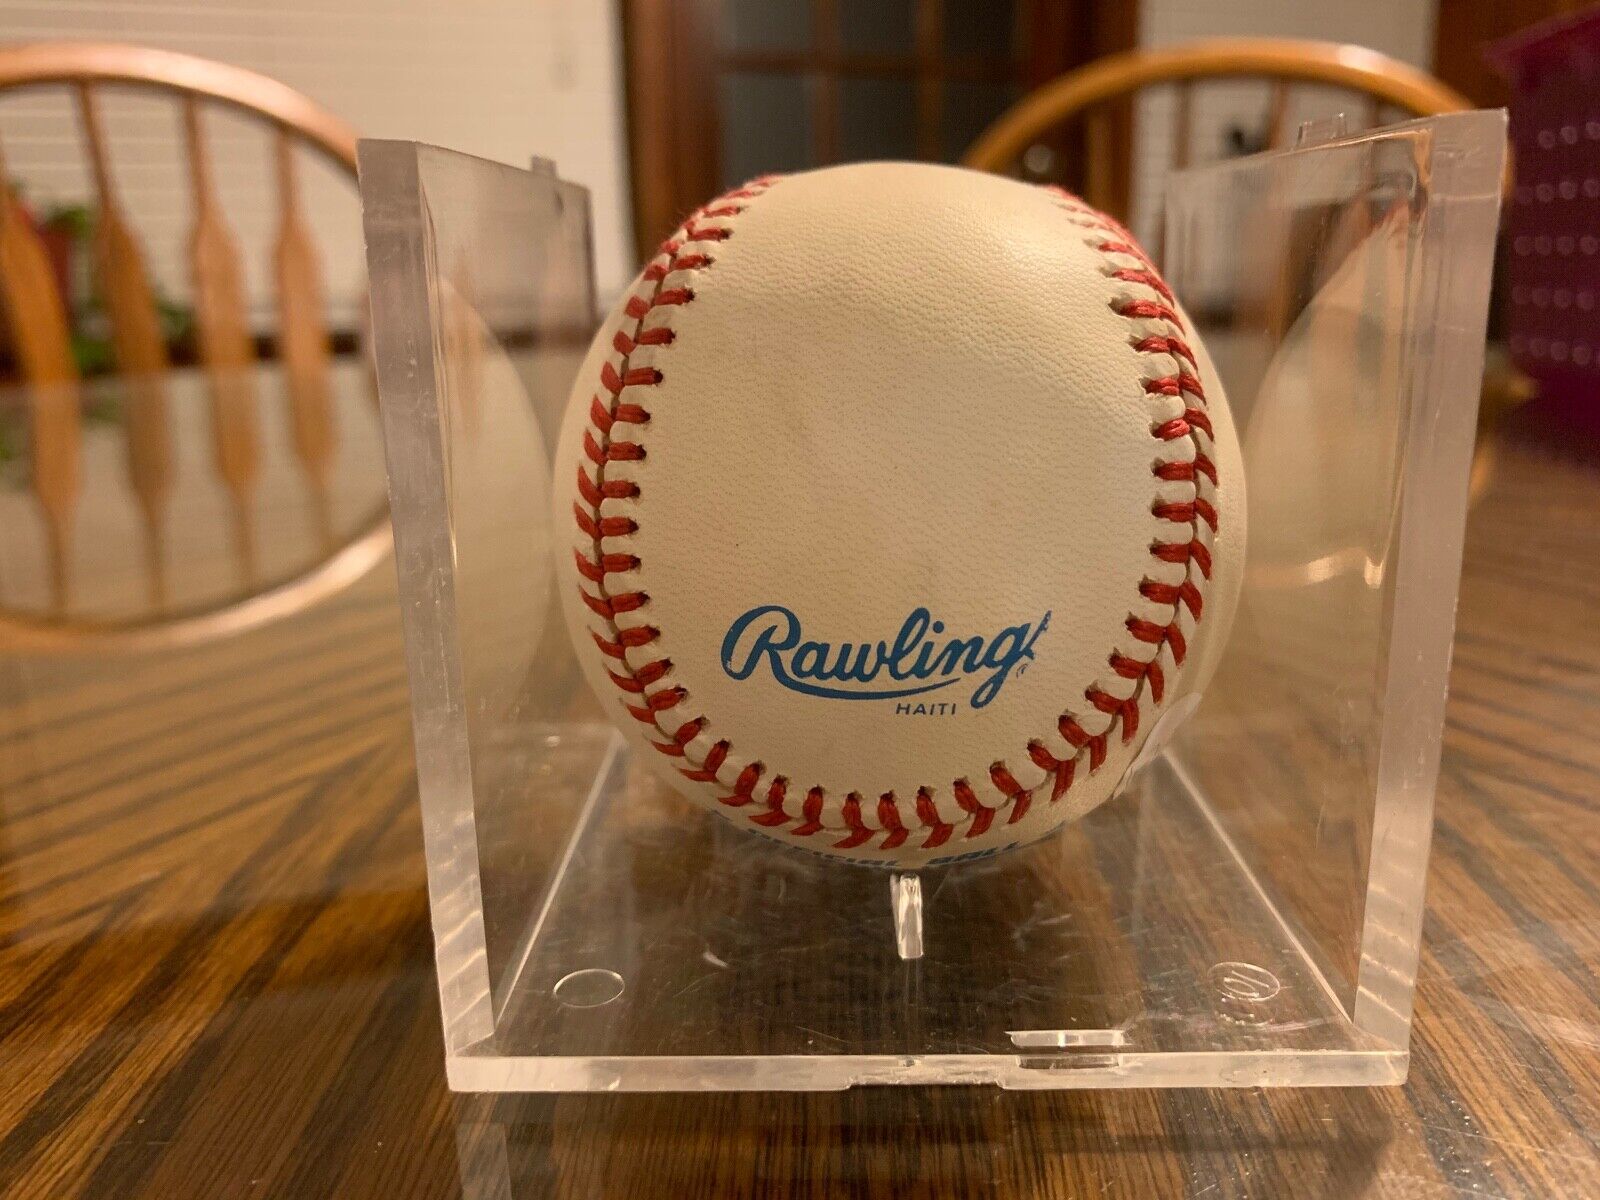 Stan Musial Autographed Rawlings Baseball  PSA Q17240 Grade 8.5 Auto 9